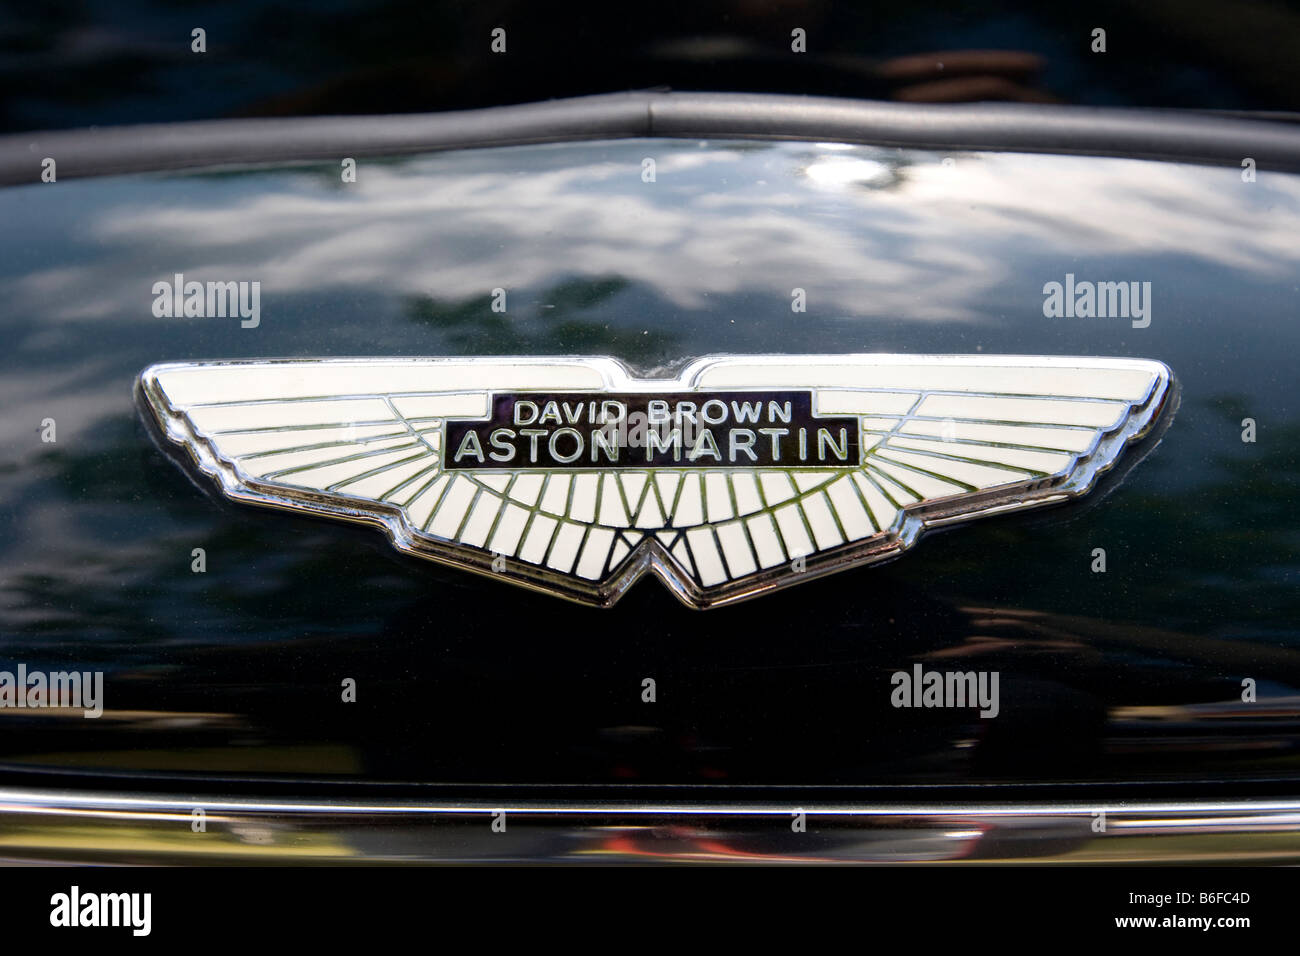 Aston Martin, David Brown, Logo Stock Photo